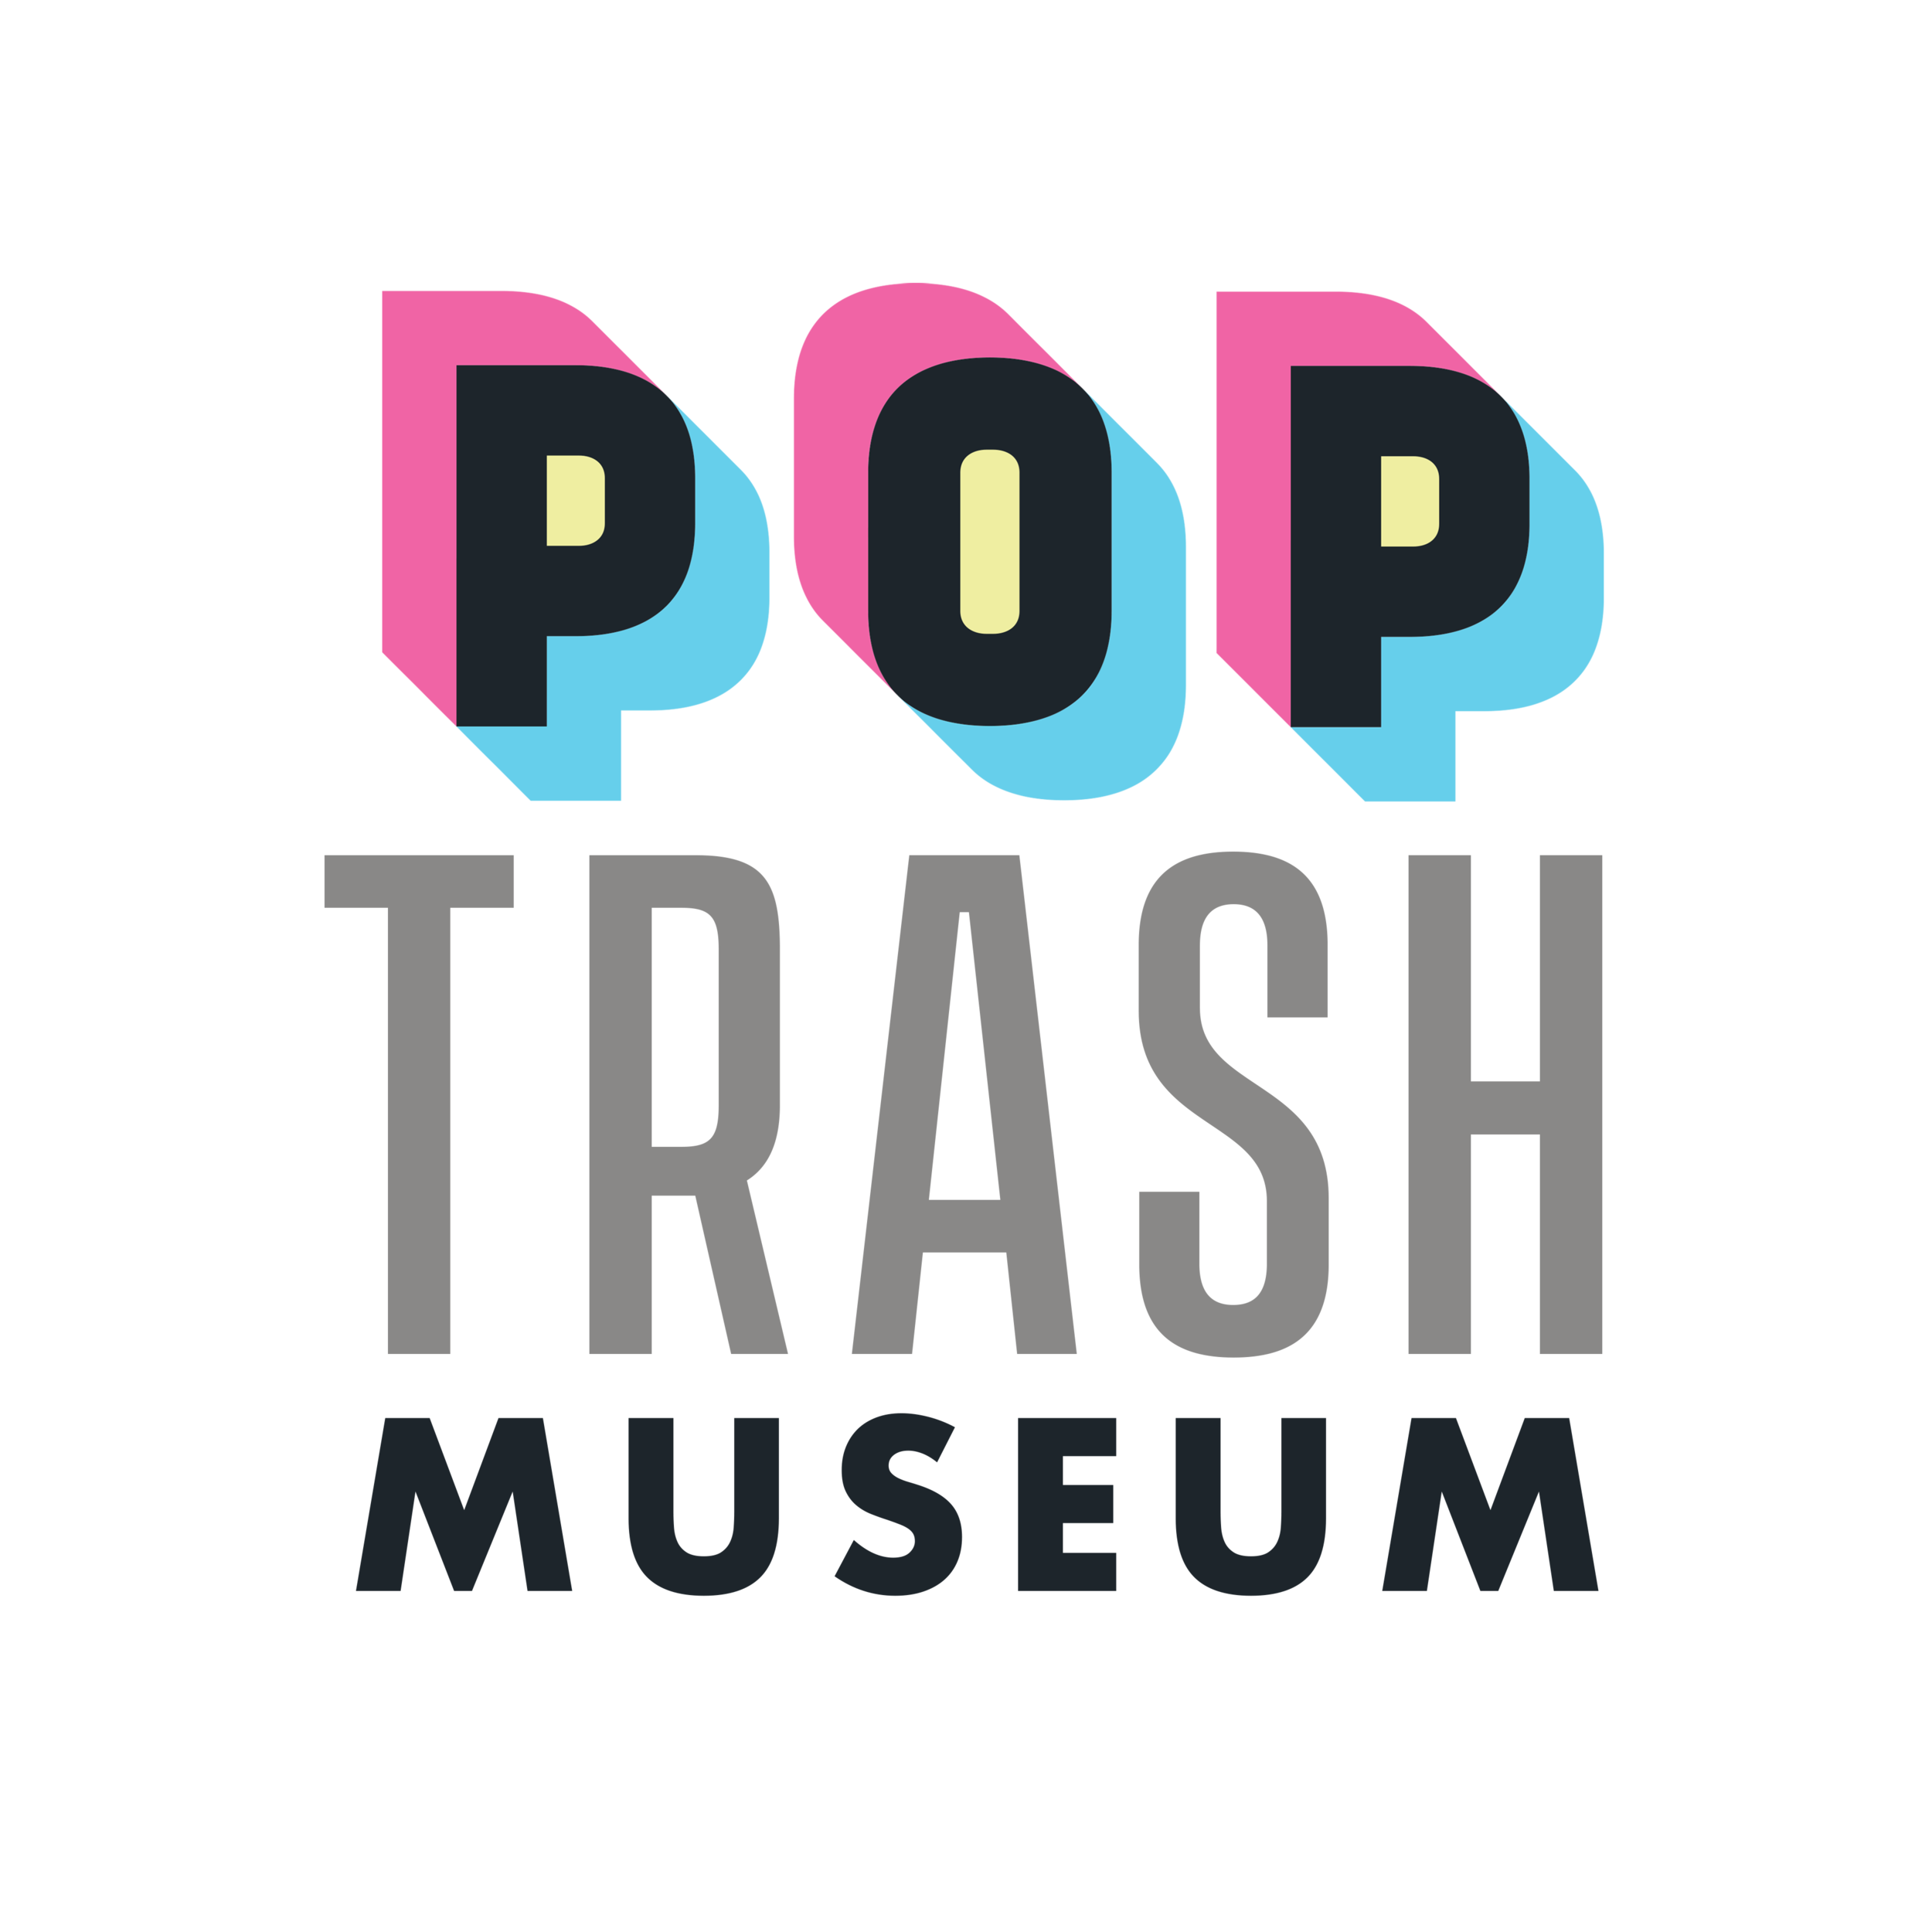 Pop Trash Museum